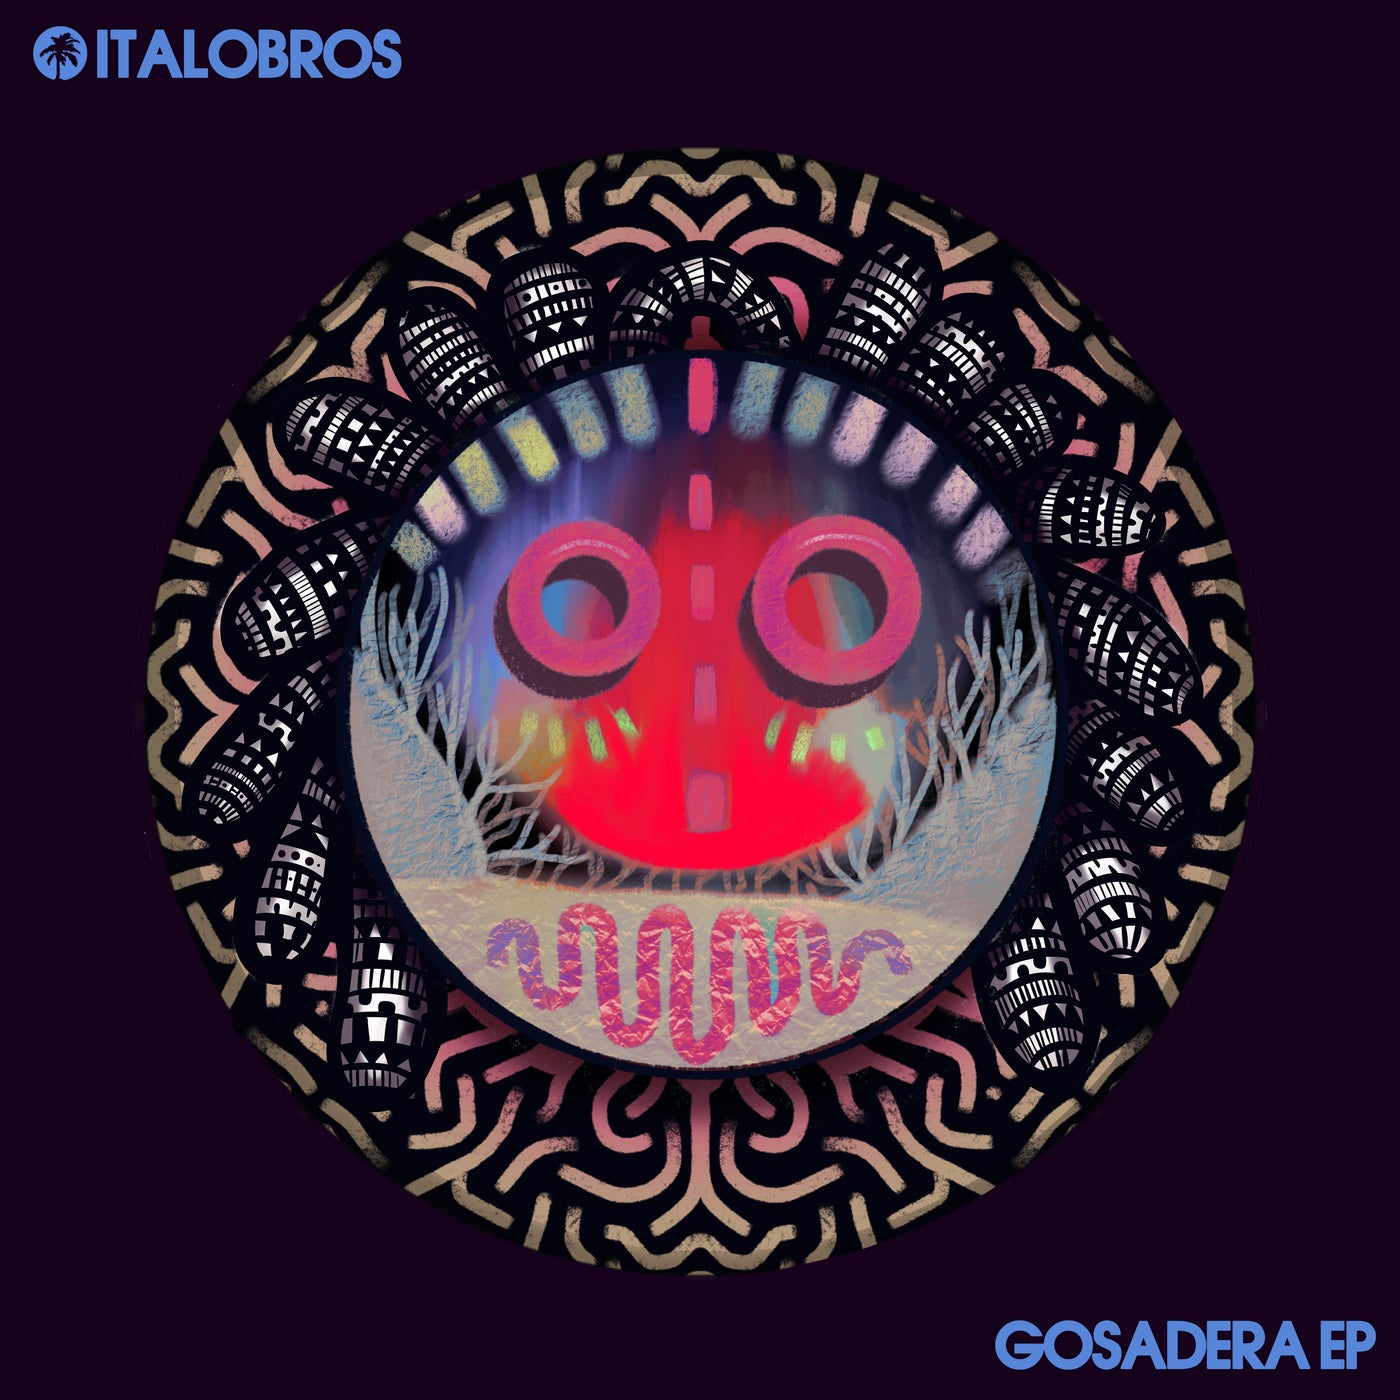 image cover: Italobros - Gosadera EP on Hot Creations